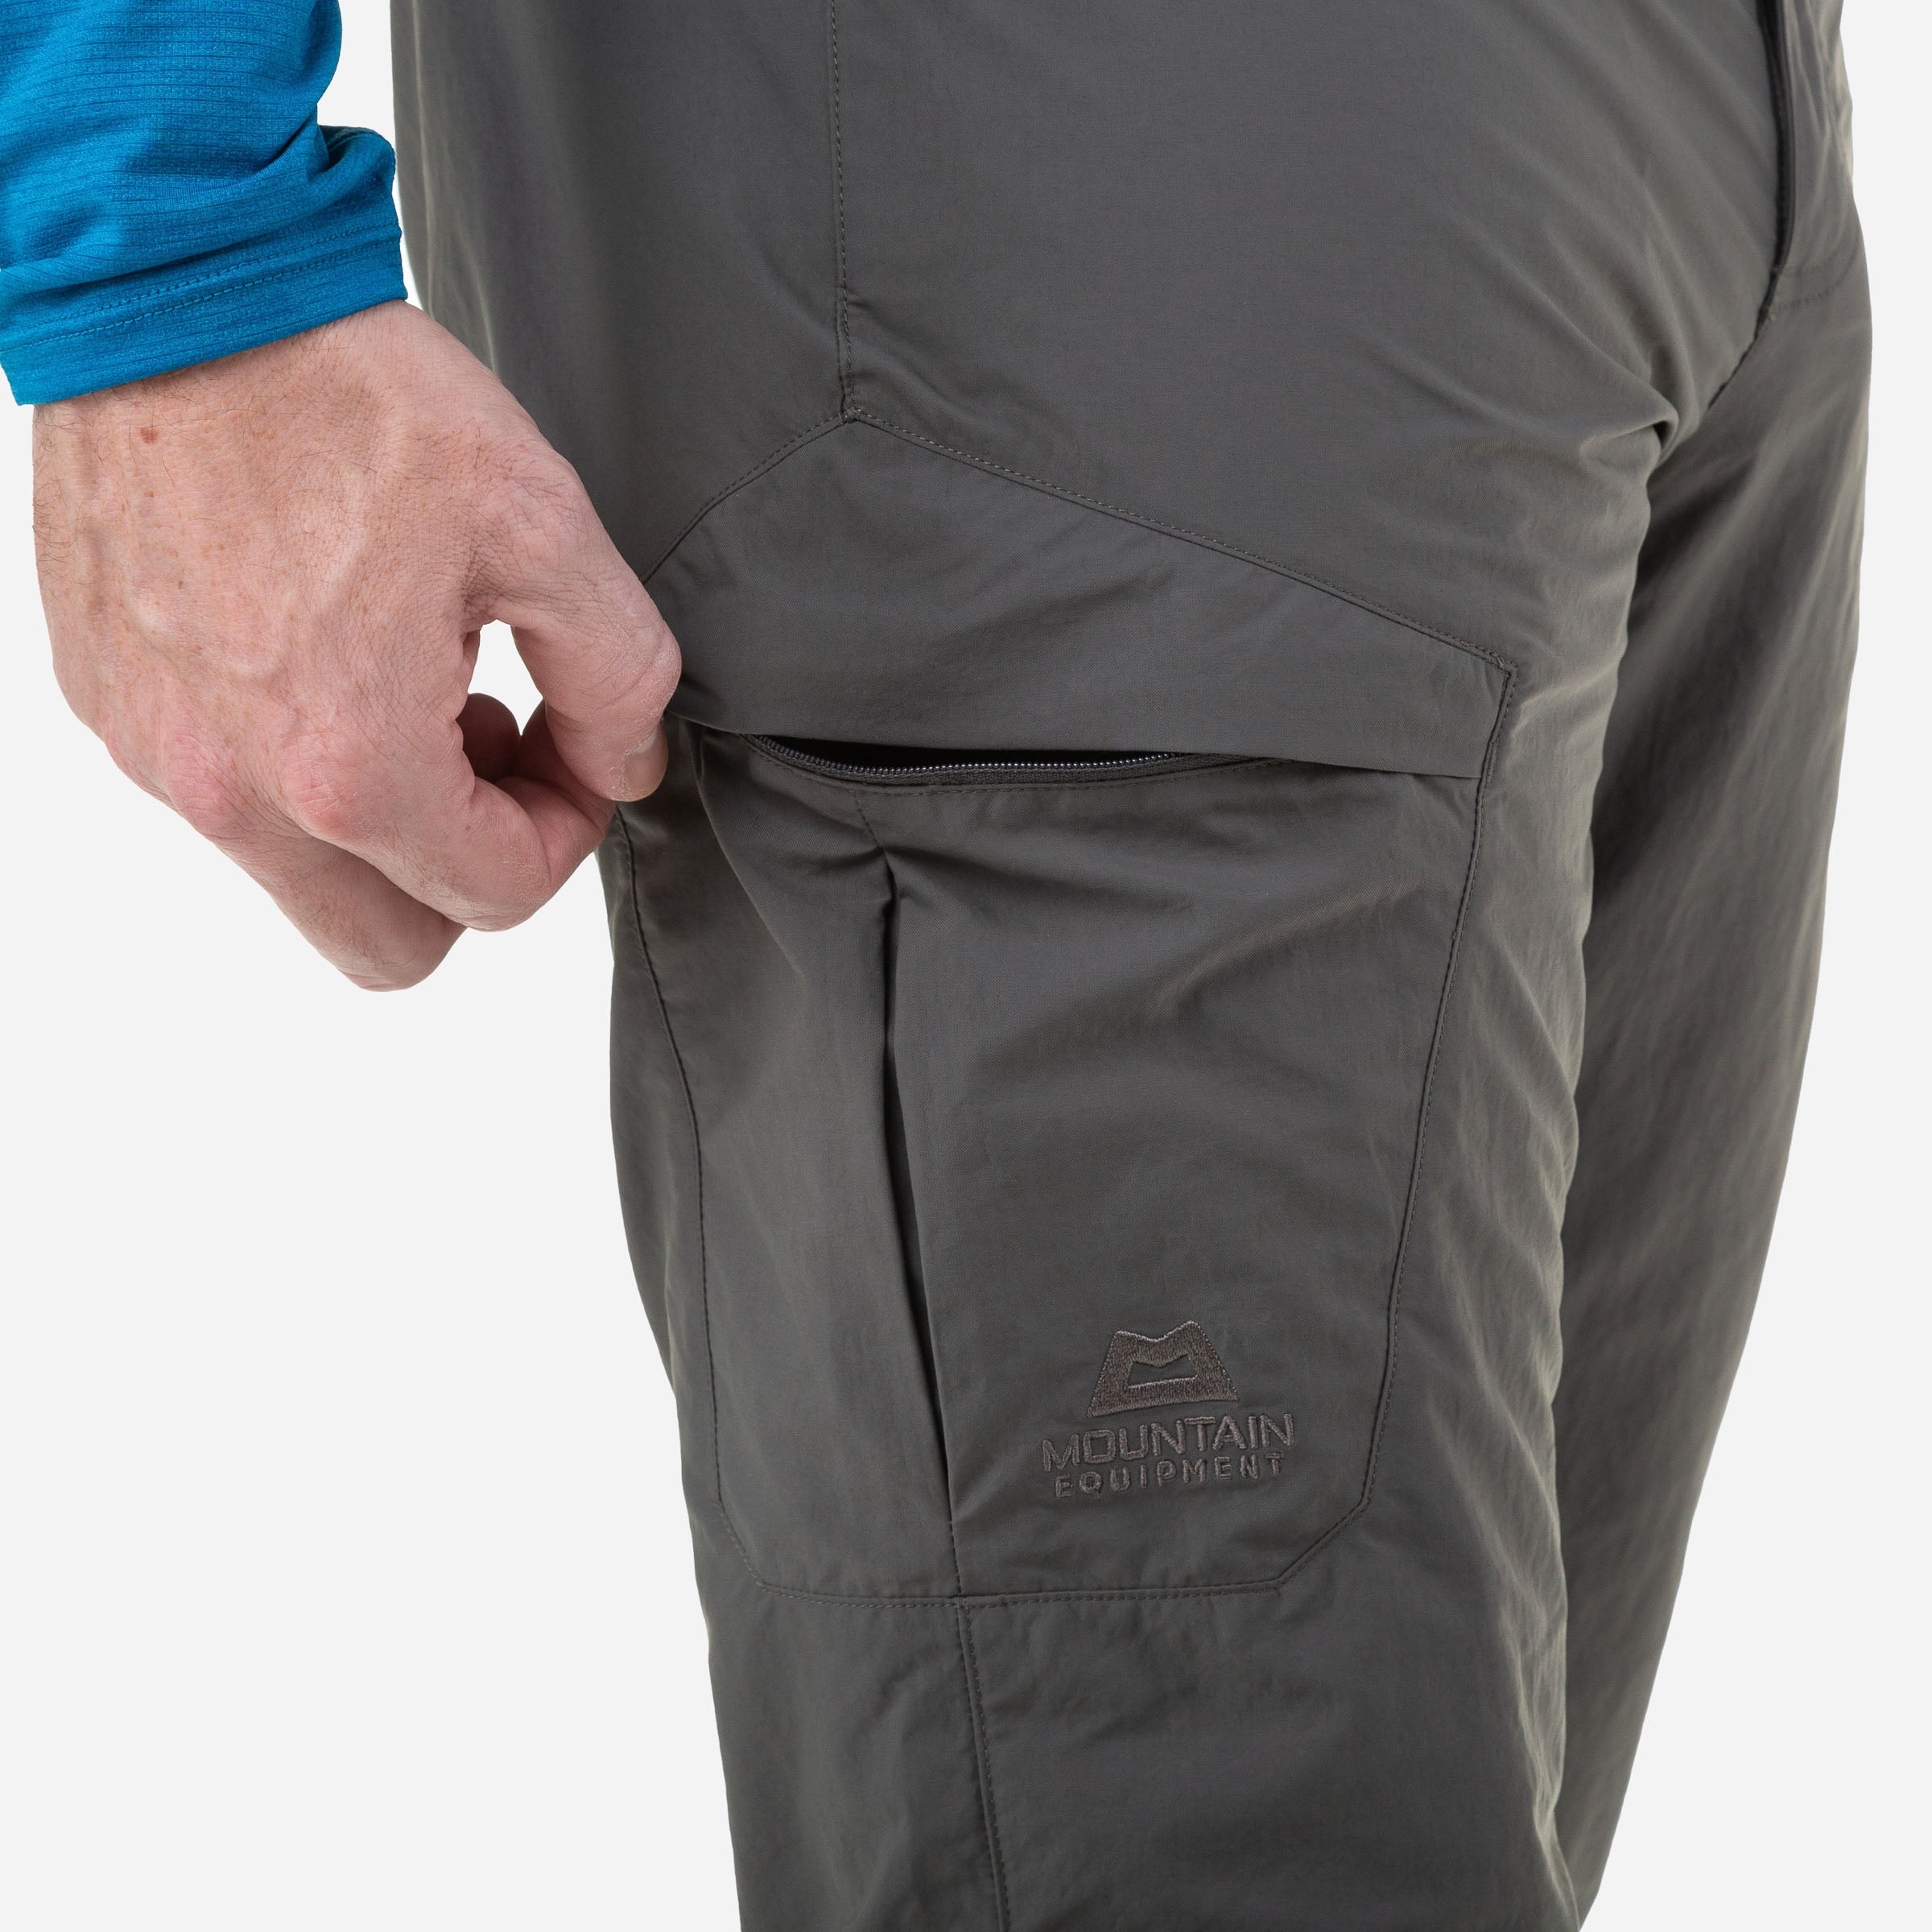 MENS MOUNTAIN EQUIPMENT Ibex Pant Walking Trousers - 30” Waist Short Leg.  £60.00 - PicClick UK